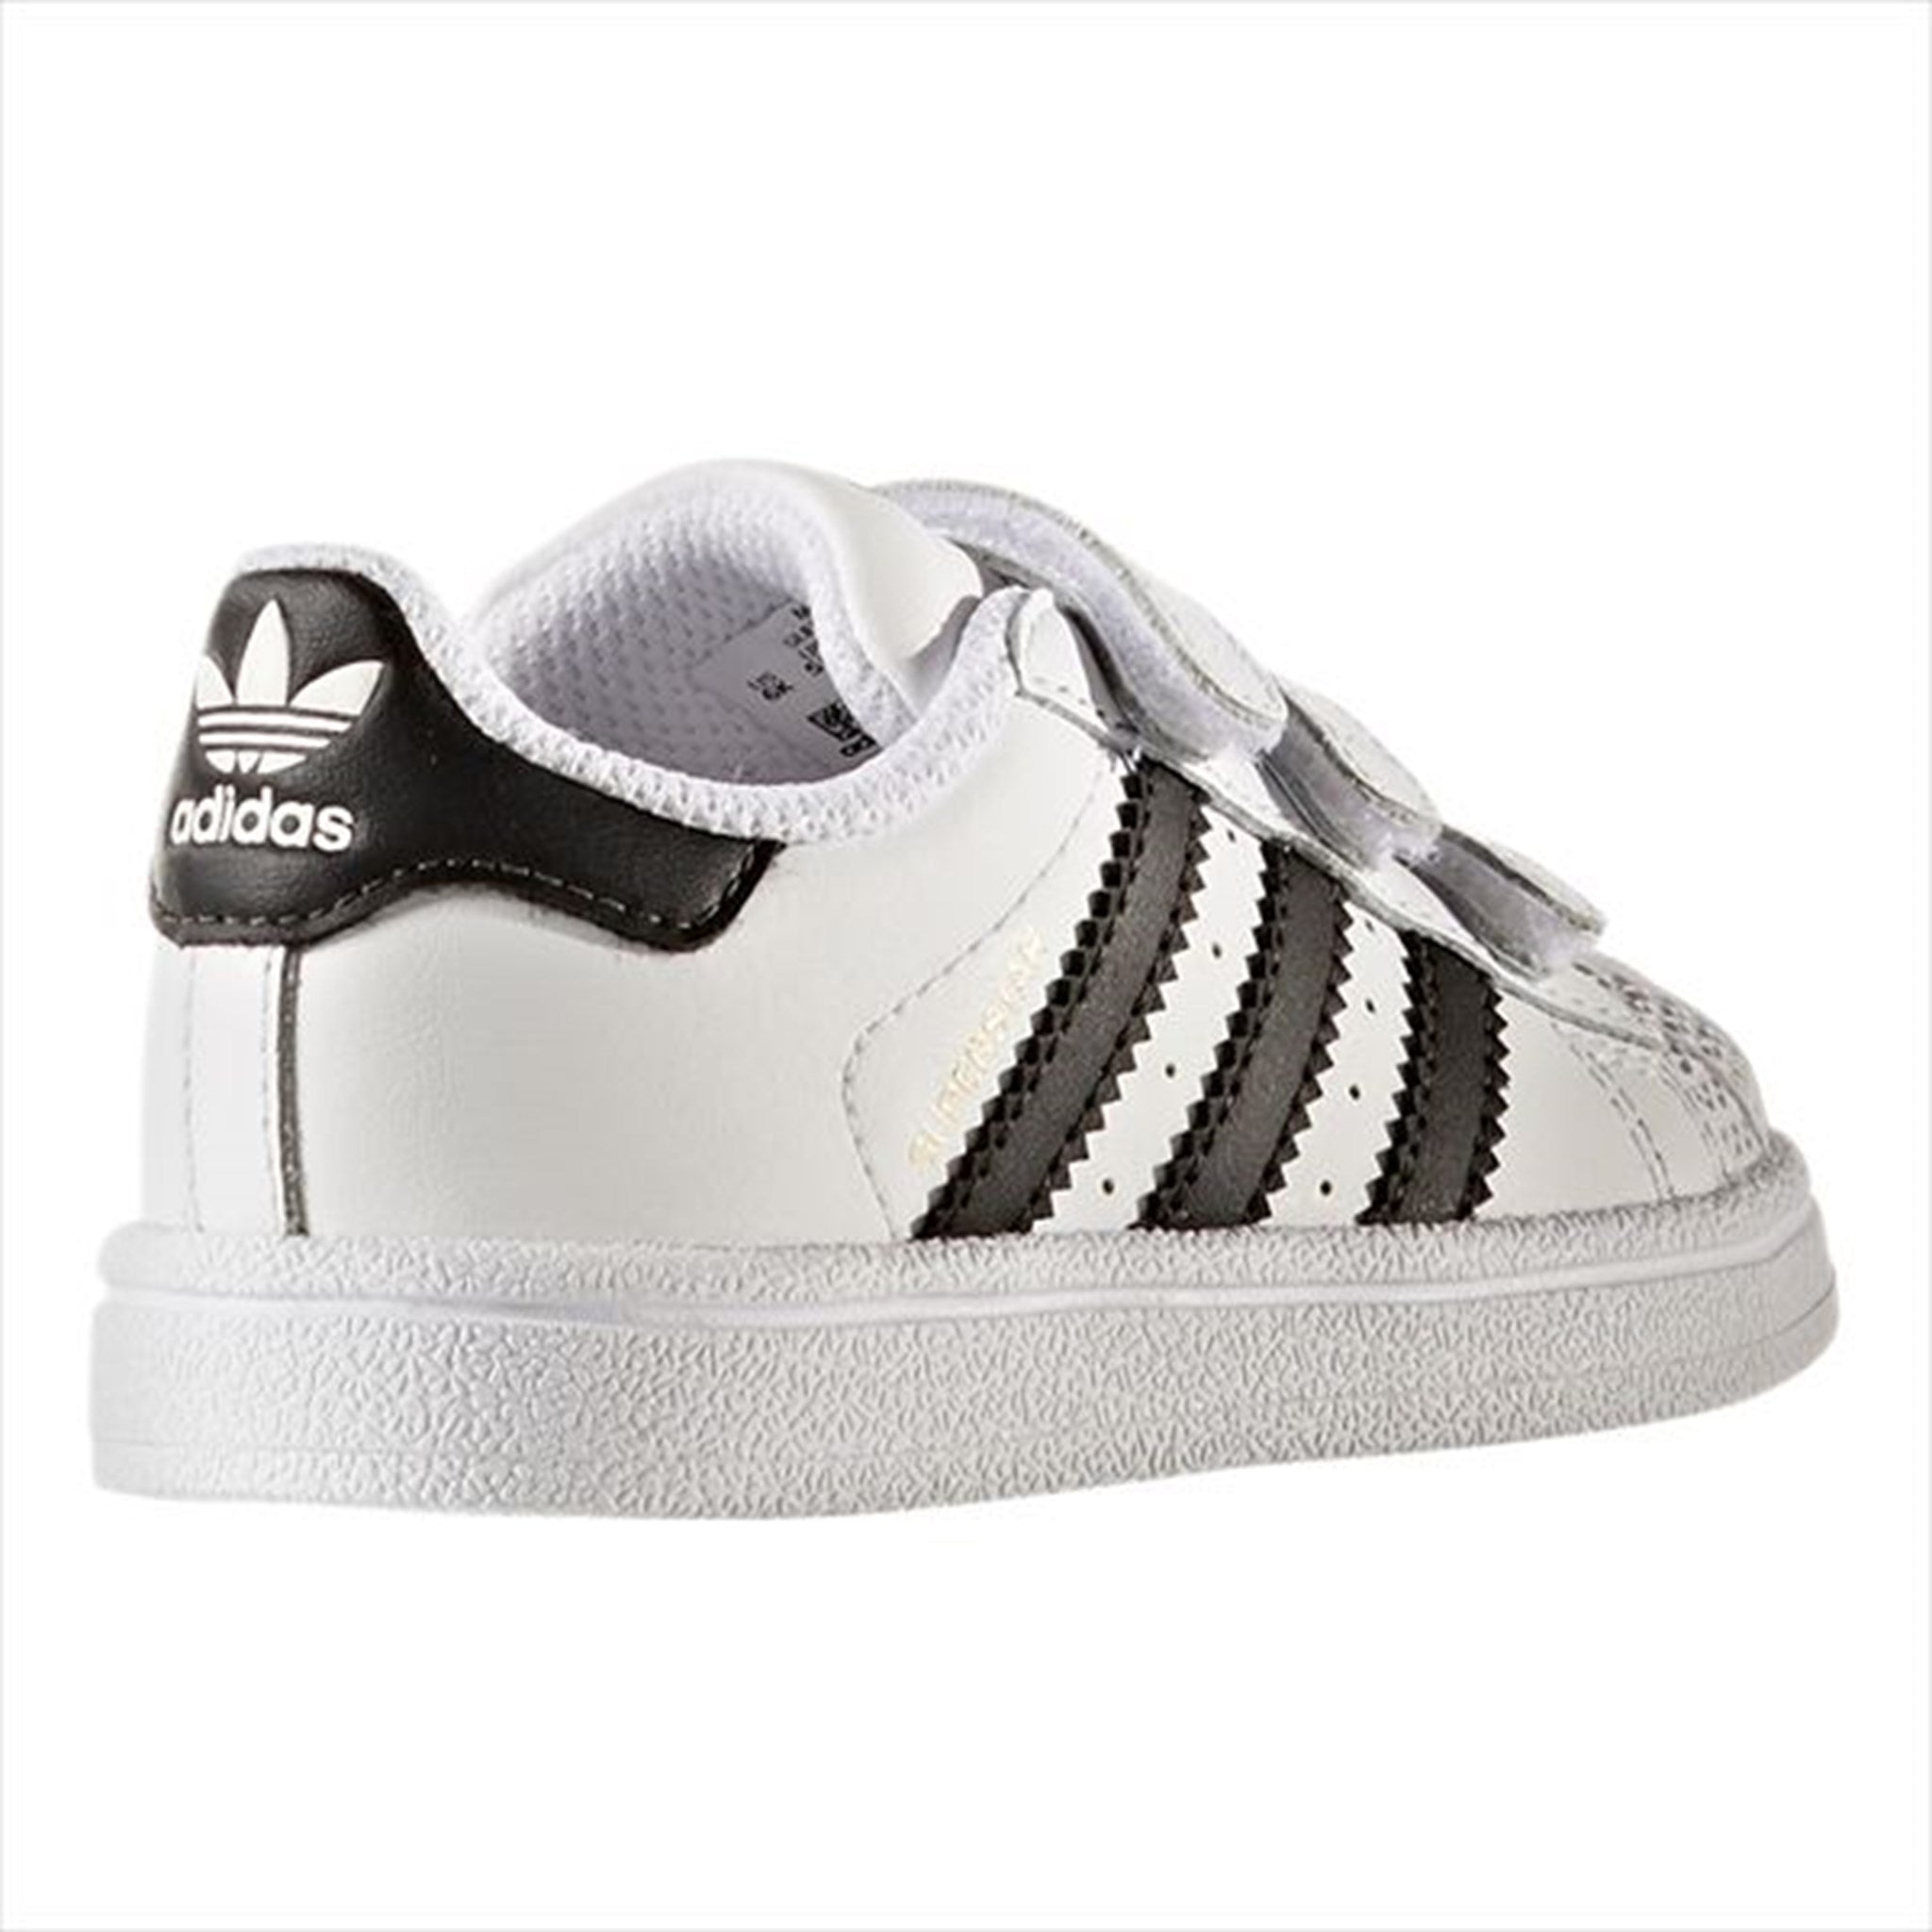 adidas Originals Superstar Sneakers White/Black Velcro 2